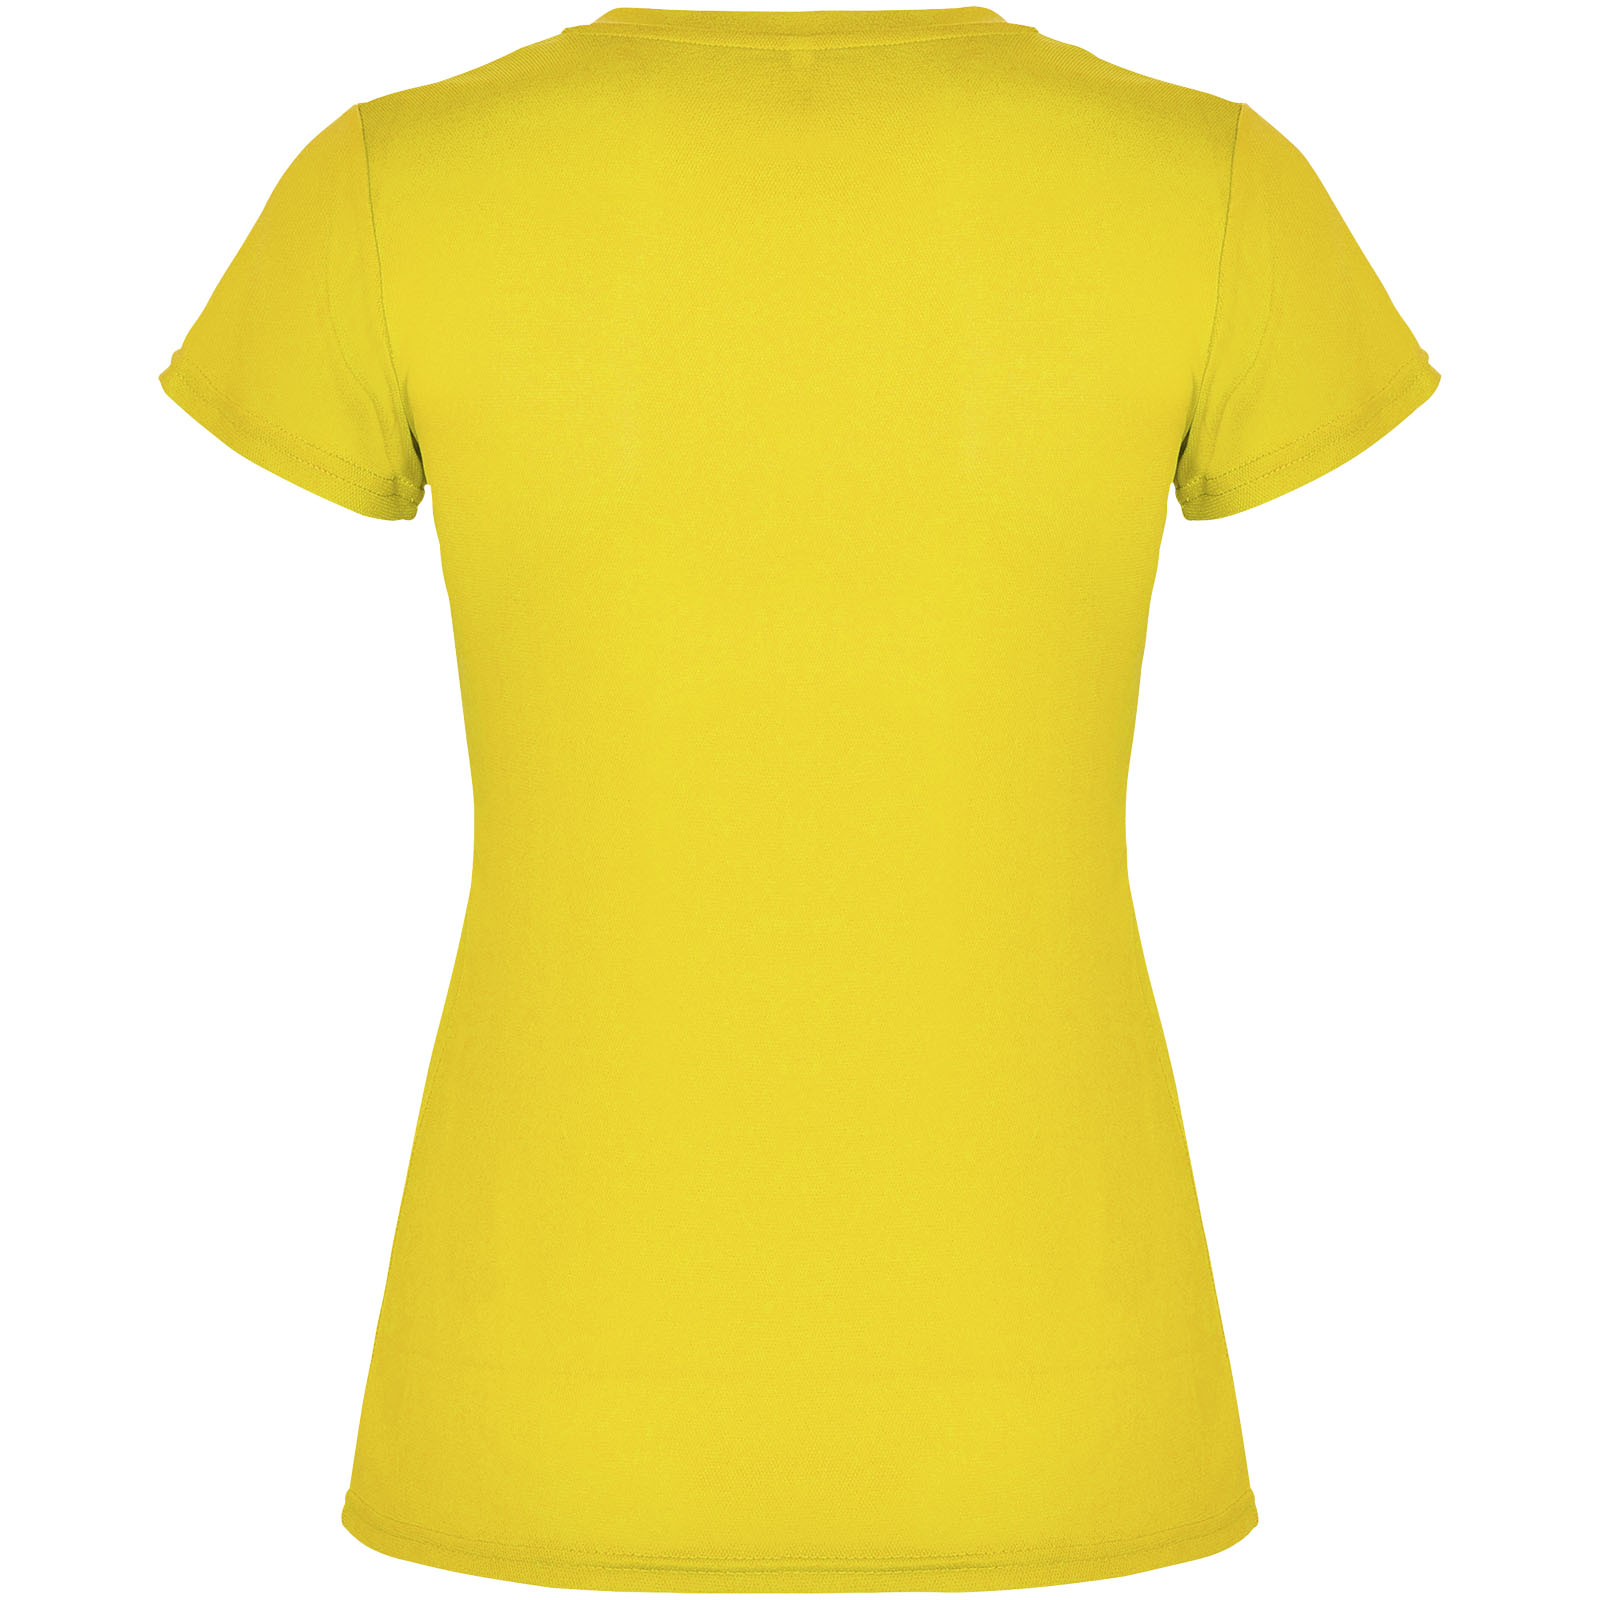 Advertising T-shirts - Montecarlo short sleeve women's sports t-shirt - 1